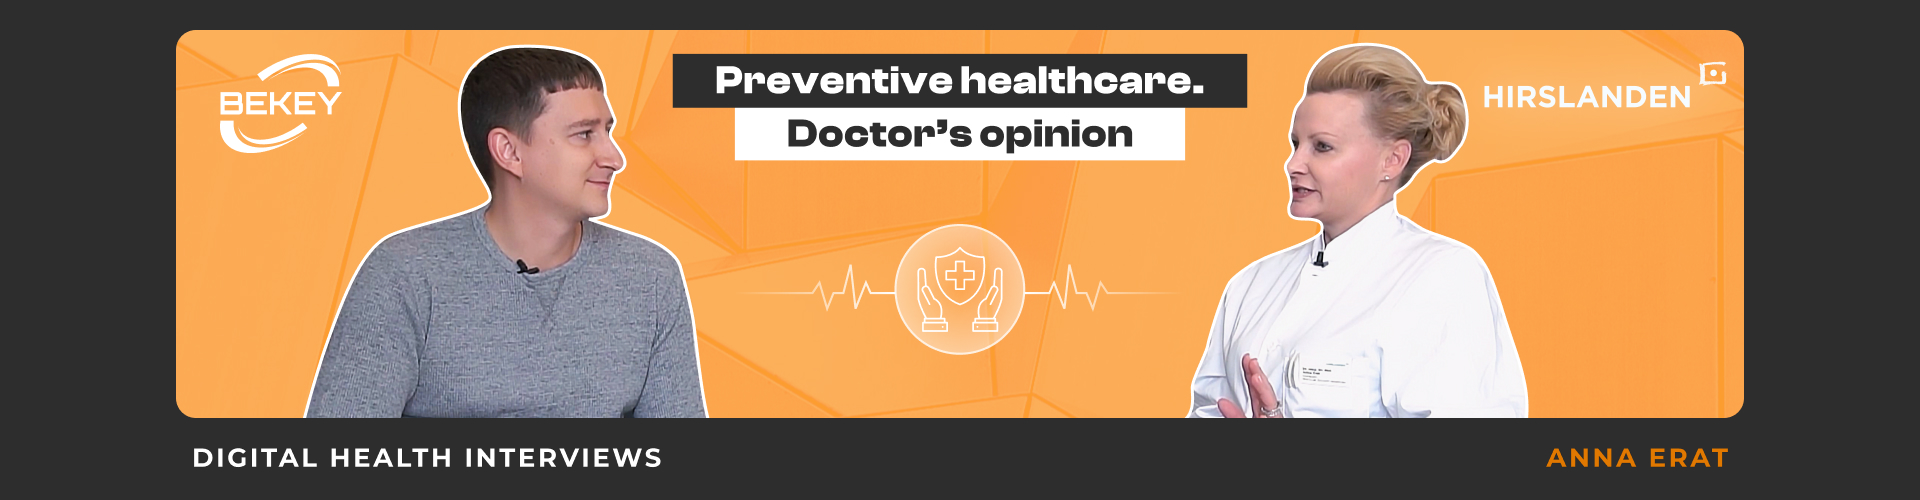 Preventive Healthcare. Doctor’s Opinion. Digital Health Interview: Anna Erat - image